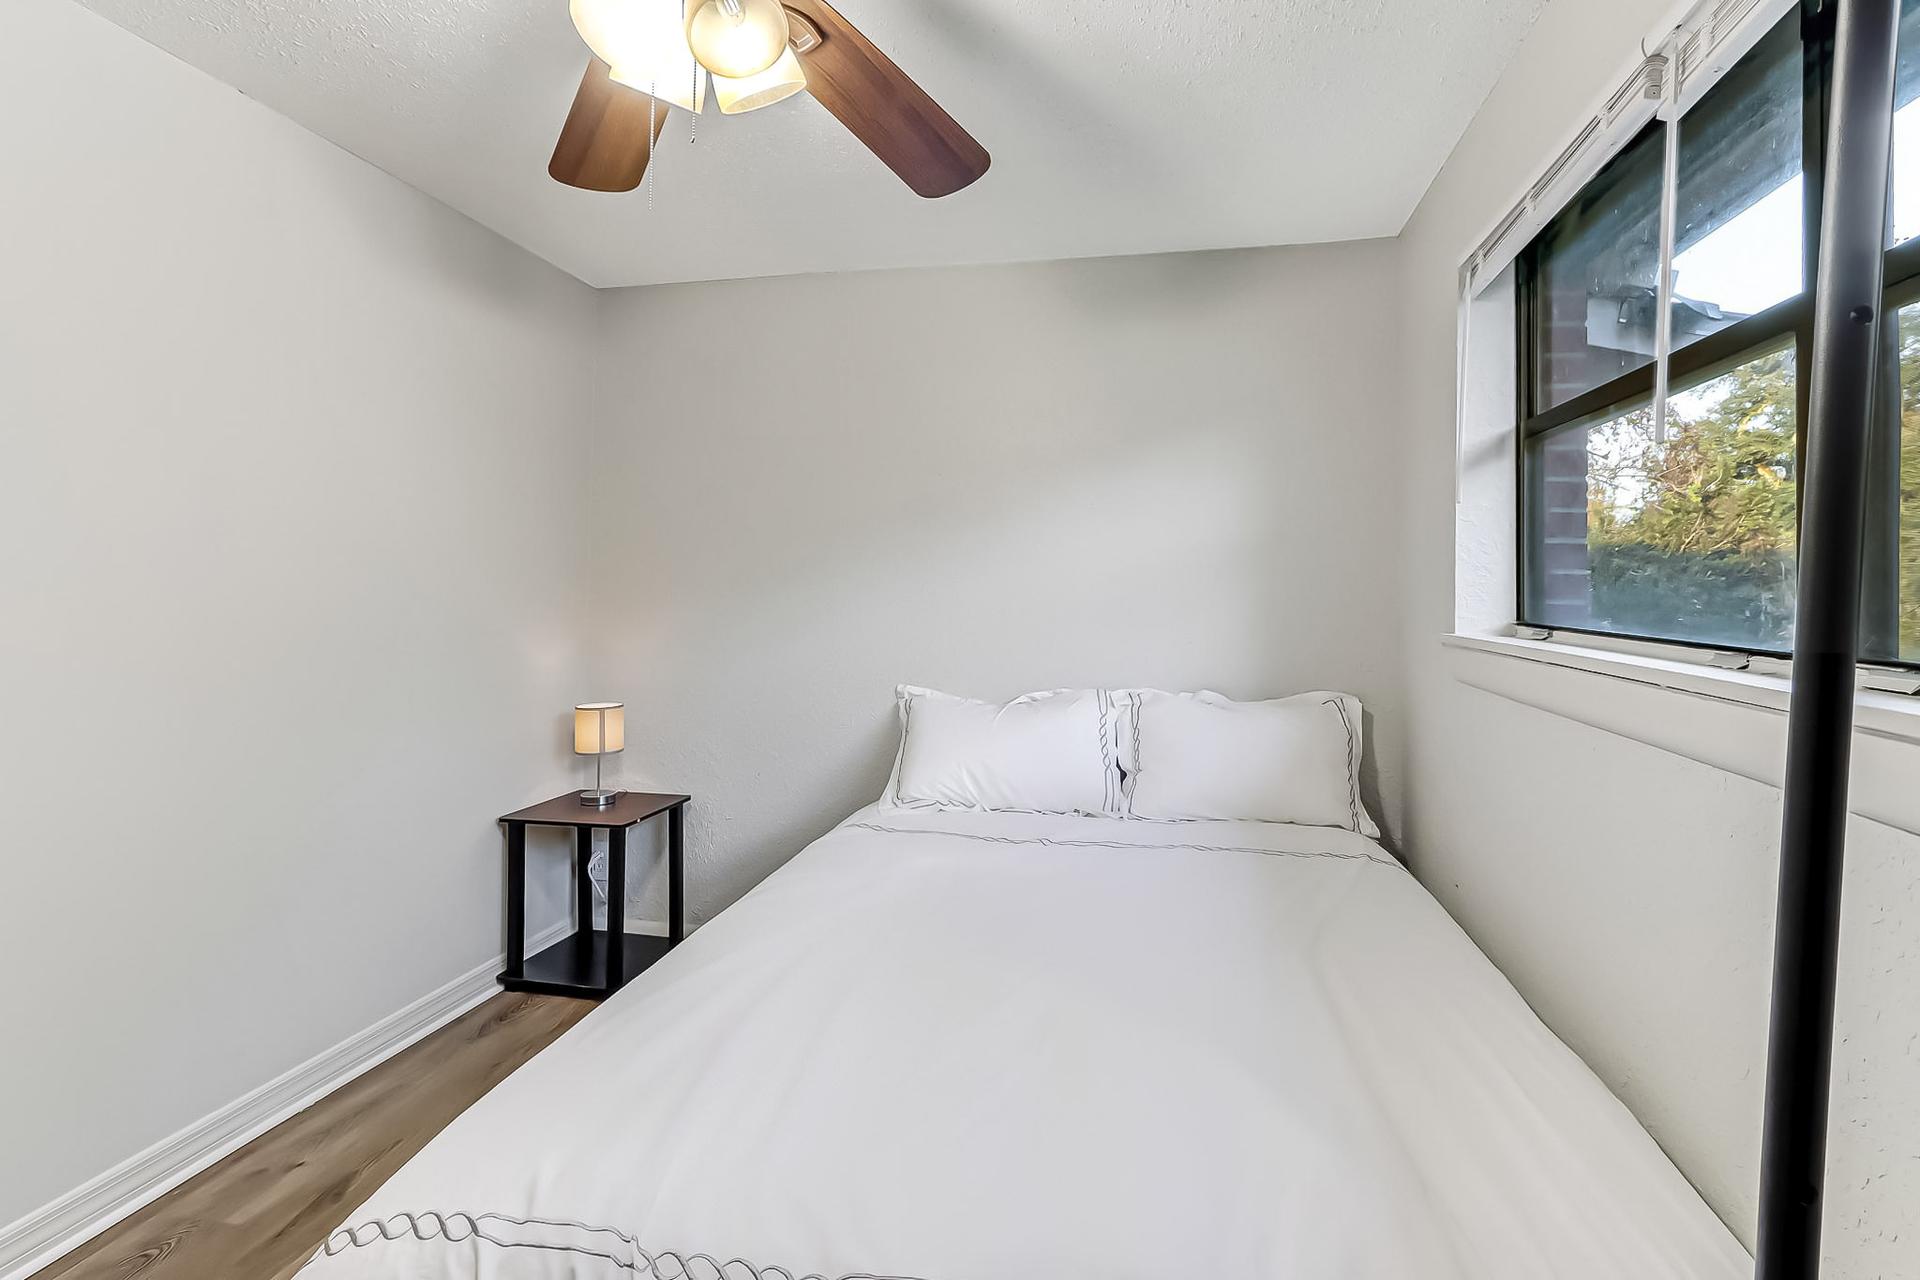 bedroom, detected: ceiling fan, bed